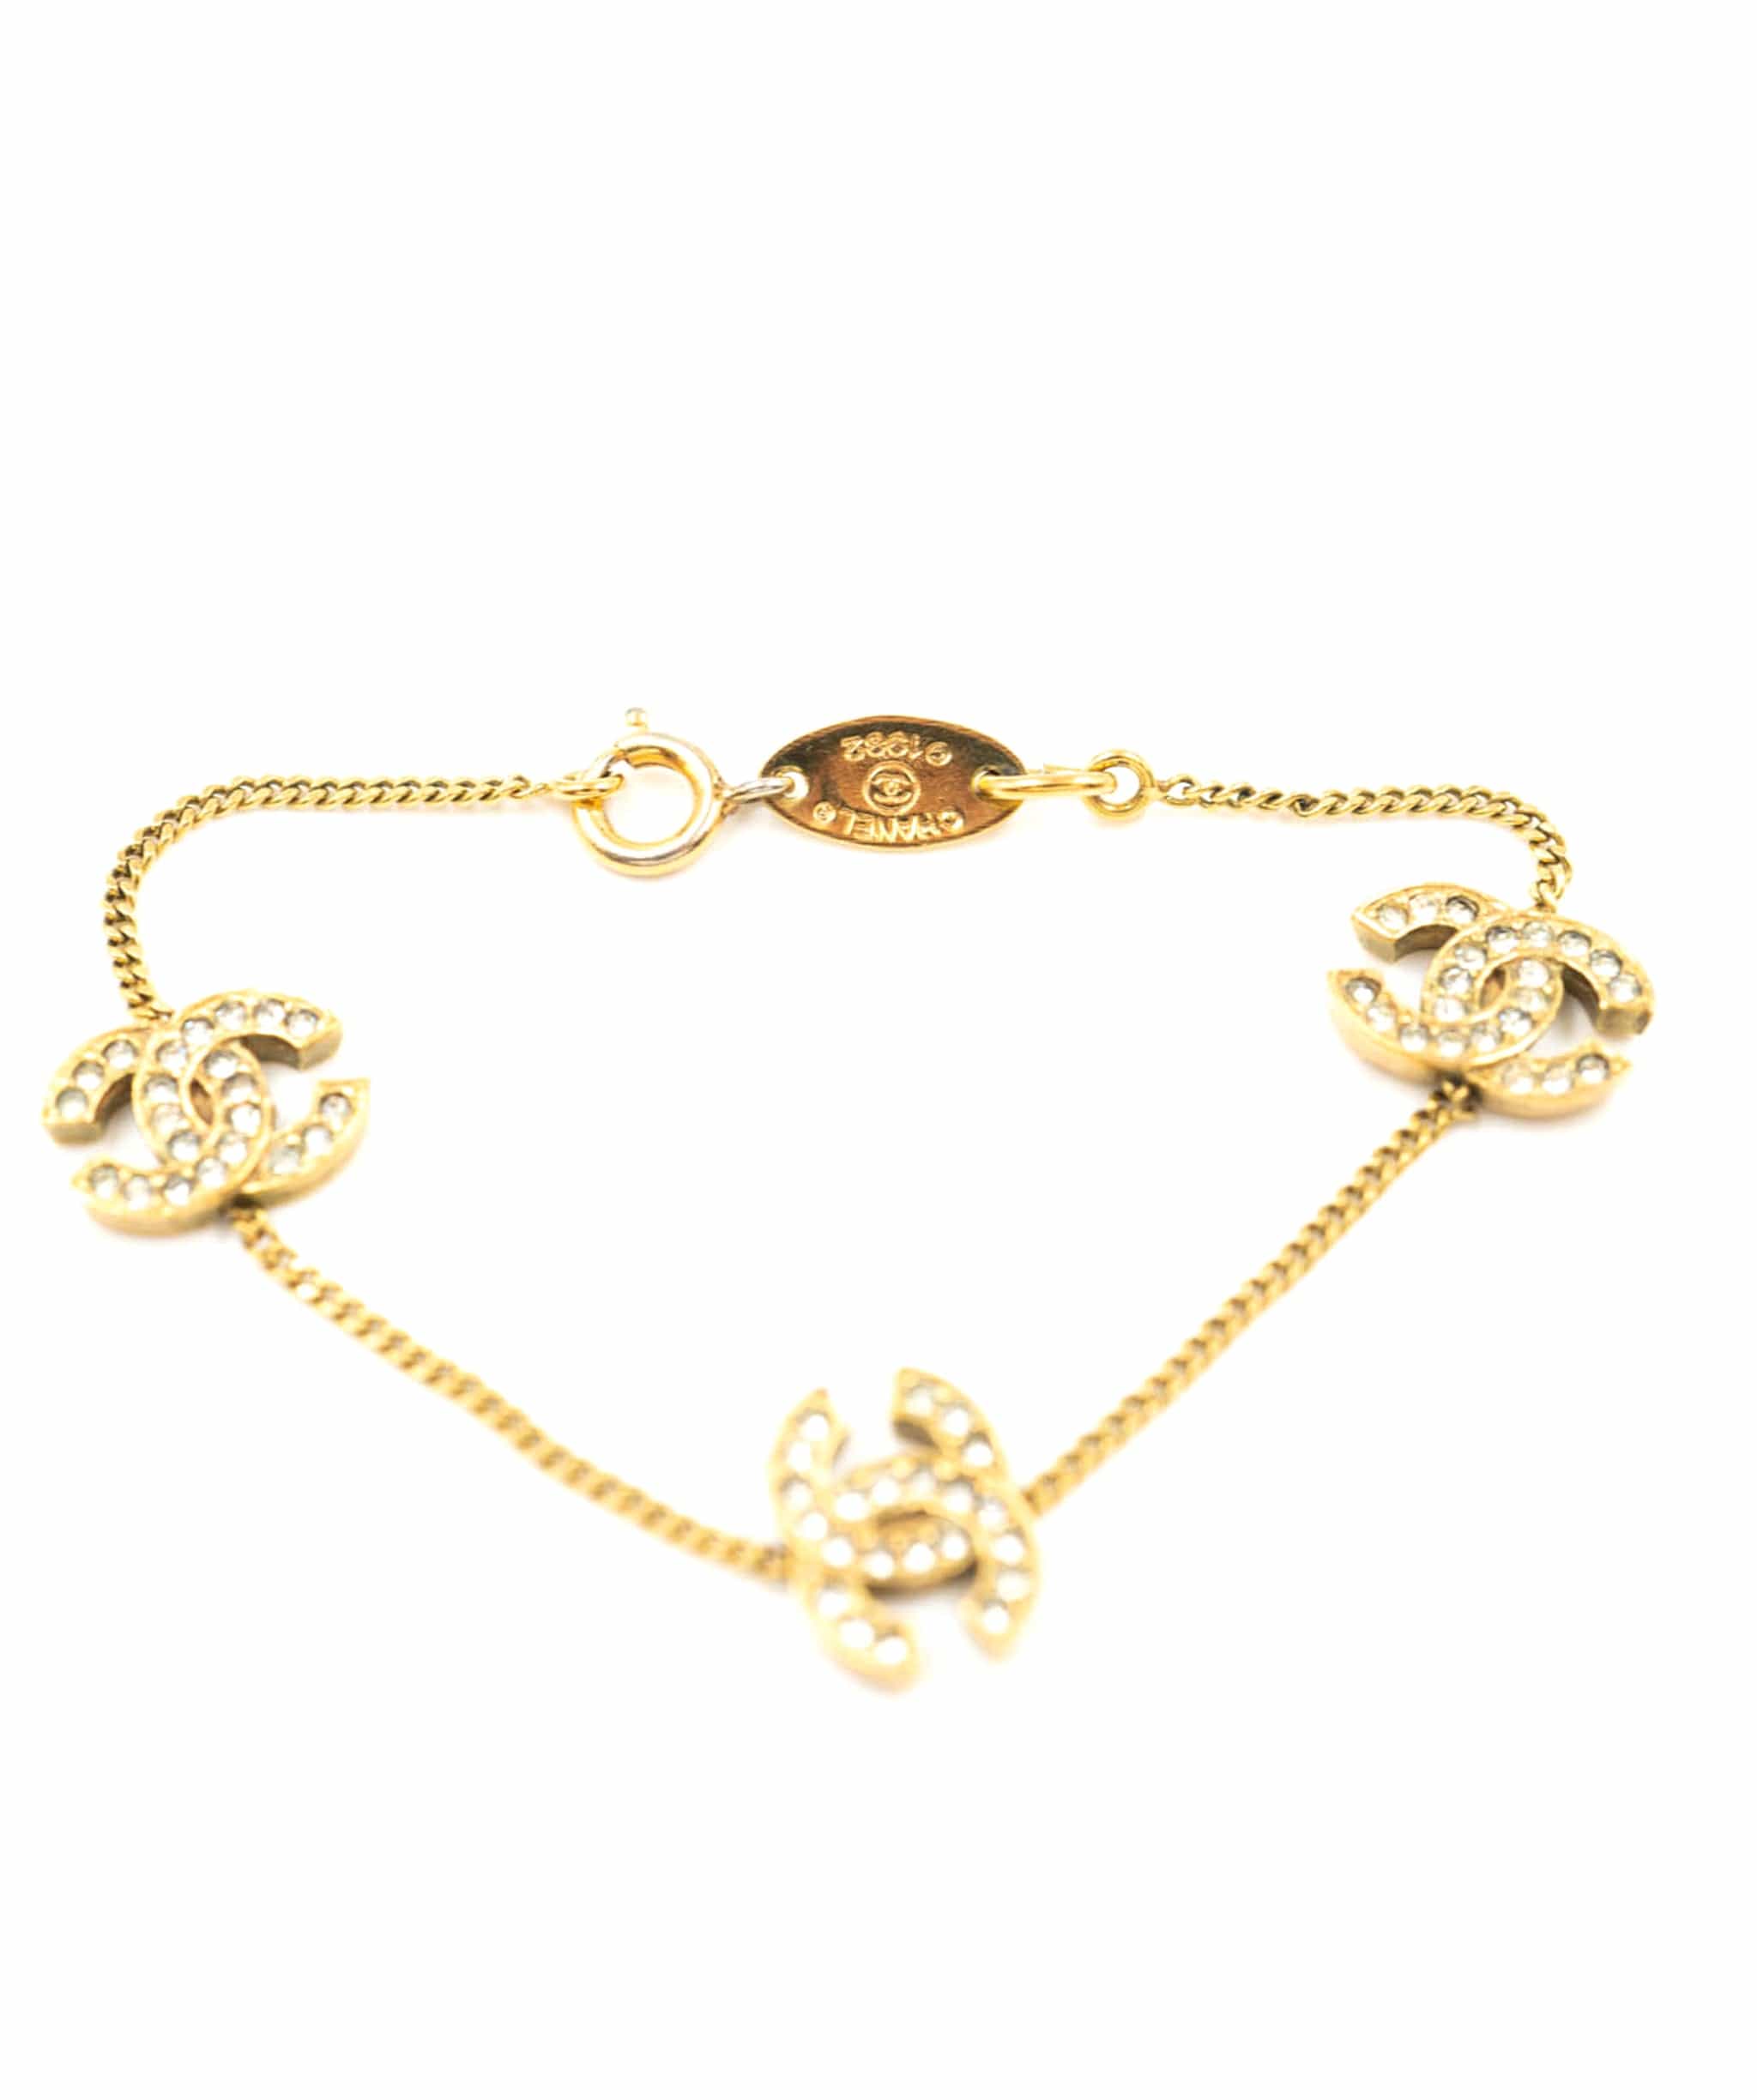 CHANEL Vintage Bracelet  Vintage chanel, Chanel jewelry, Chanel